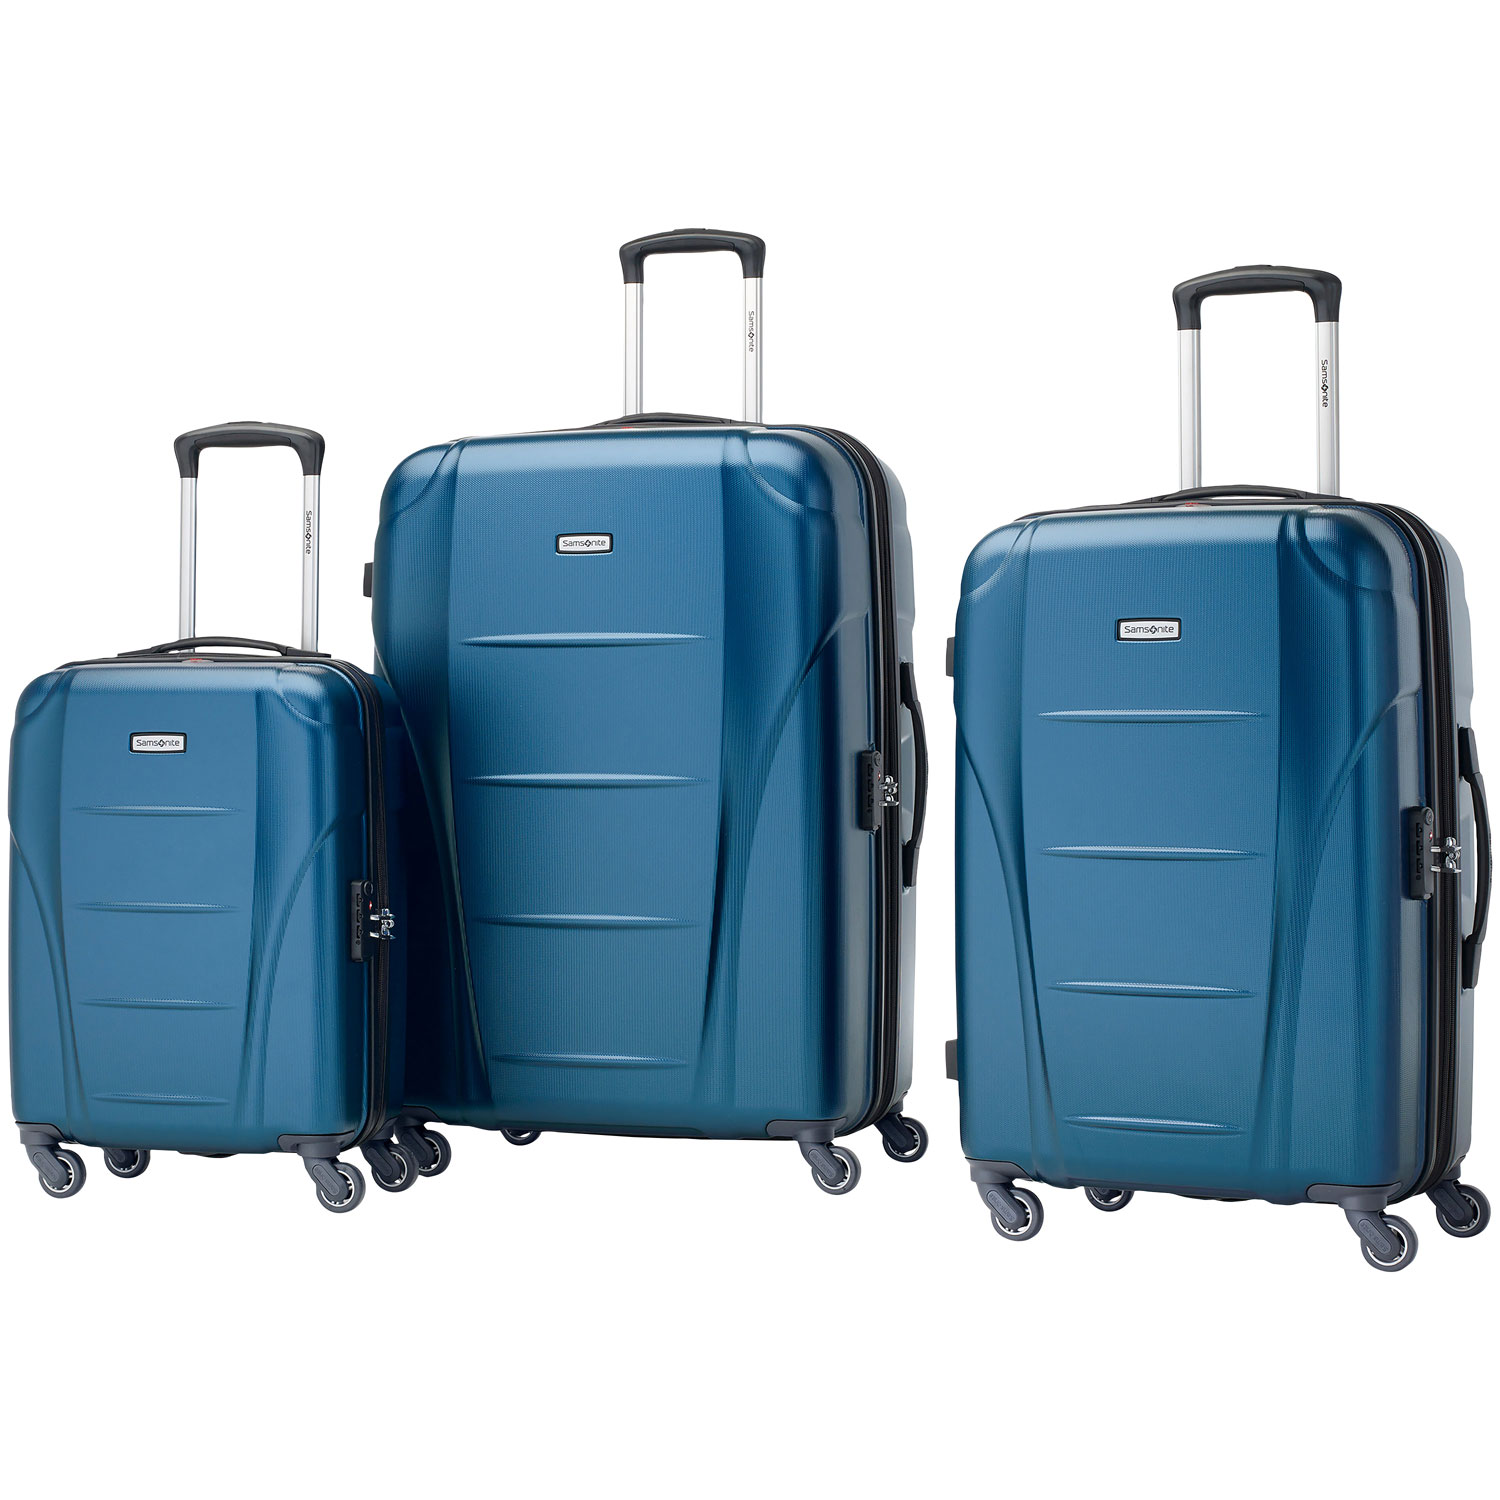 Samsonite Winfield NXT 3-Piece Hard Side Expandable Luggage Set - Blue